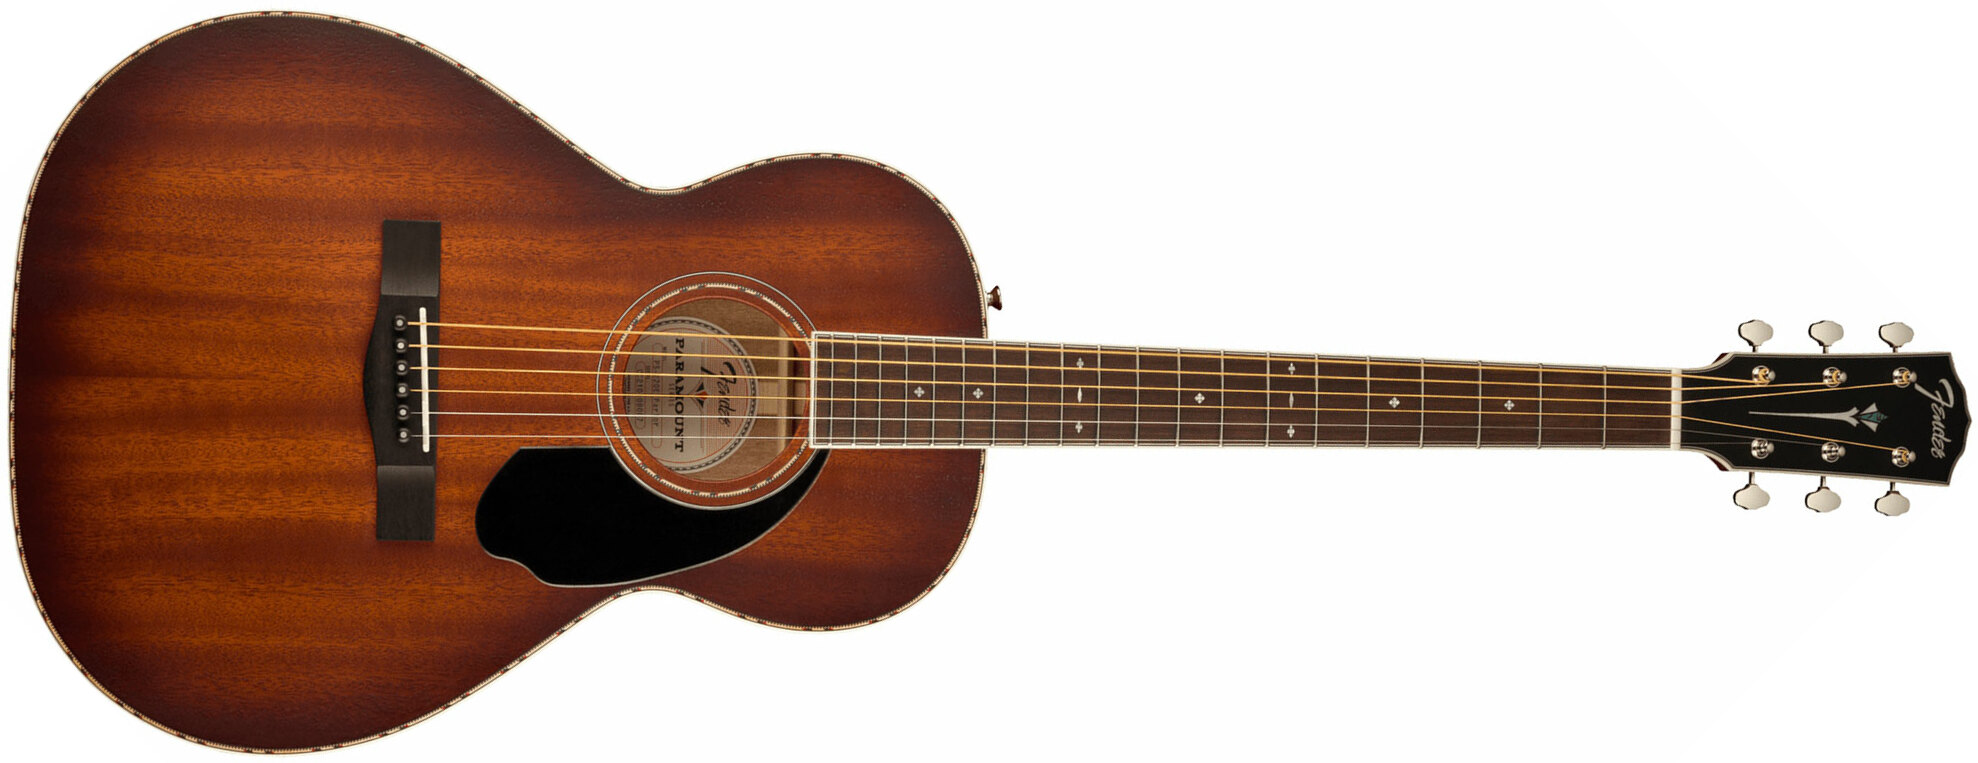 Fender Ps-220e Paramount All Mahogany Parlor Tout Acajou Ova - Aged Cognac Burst - Electro acoustic guitar - Main picture